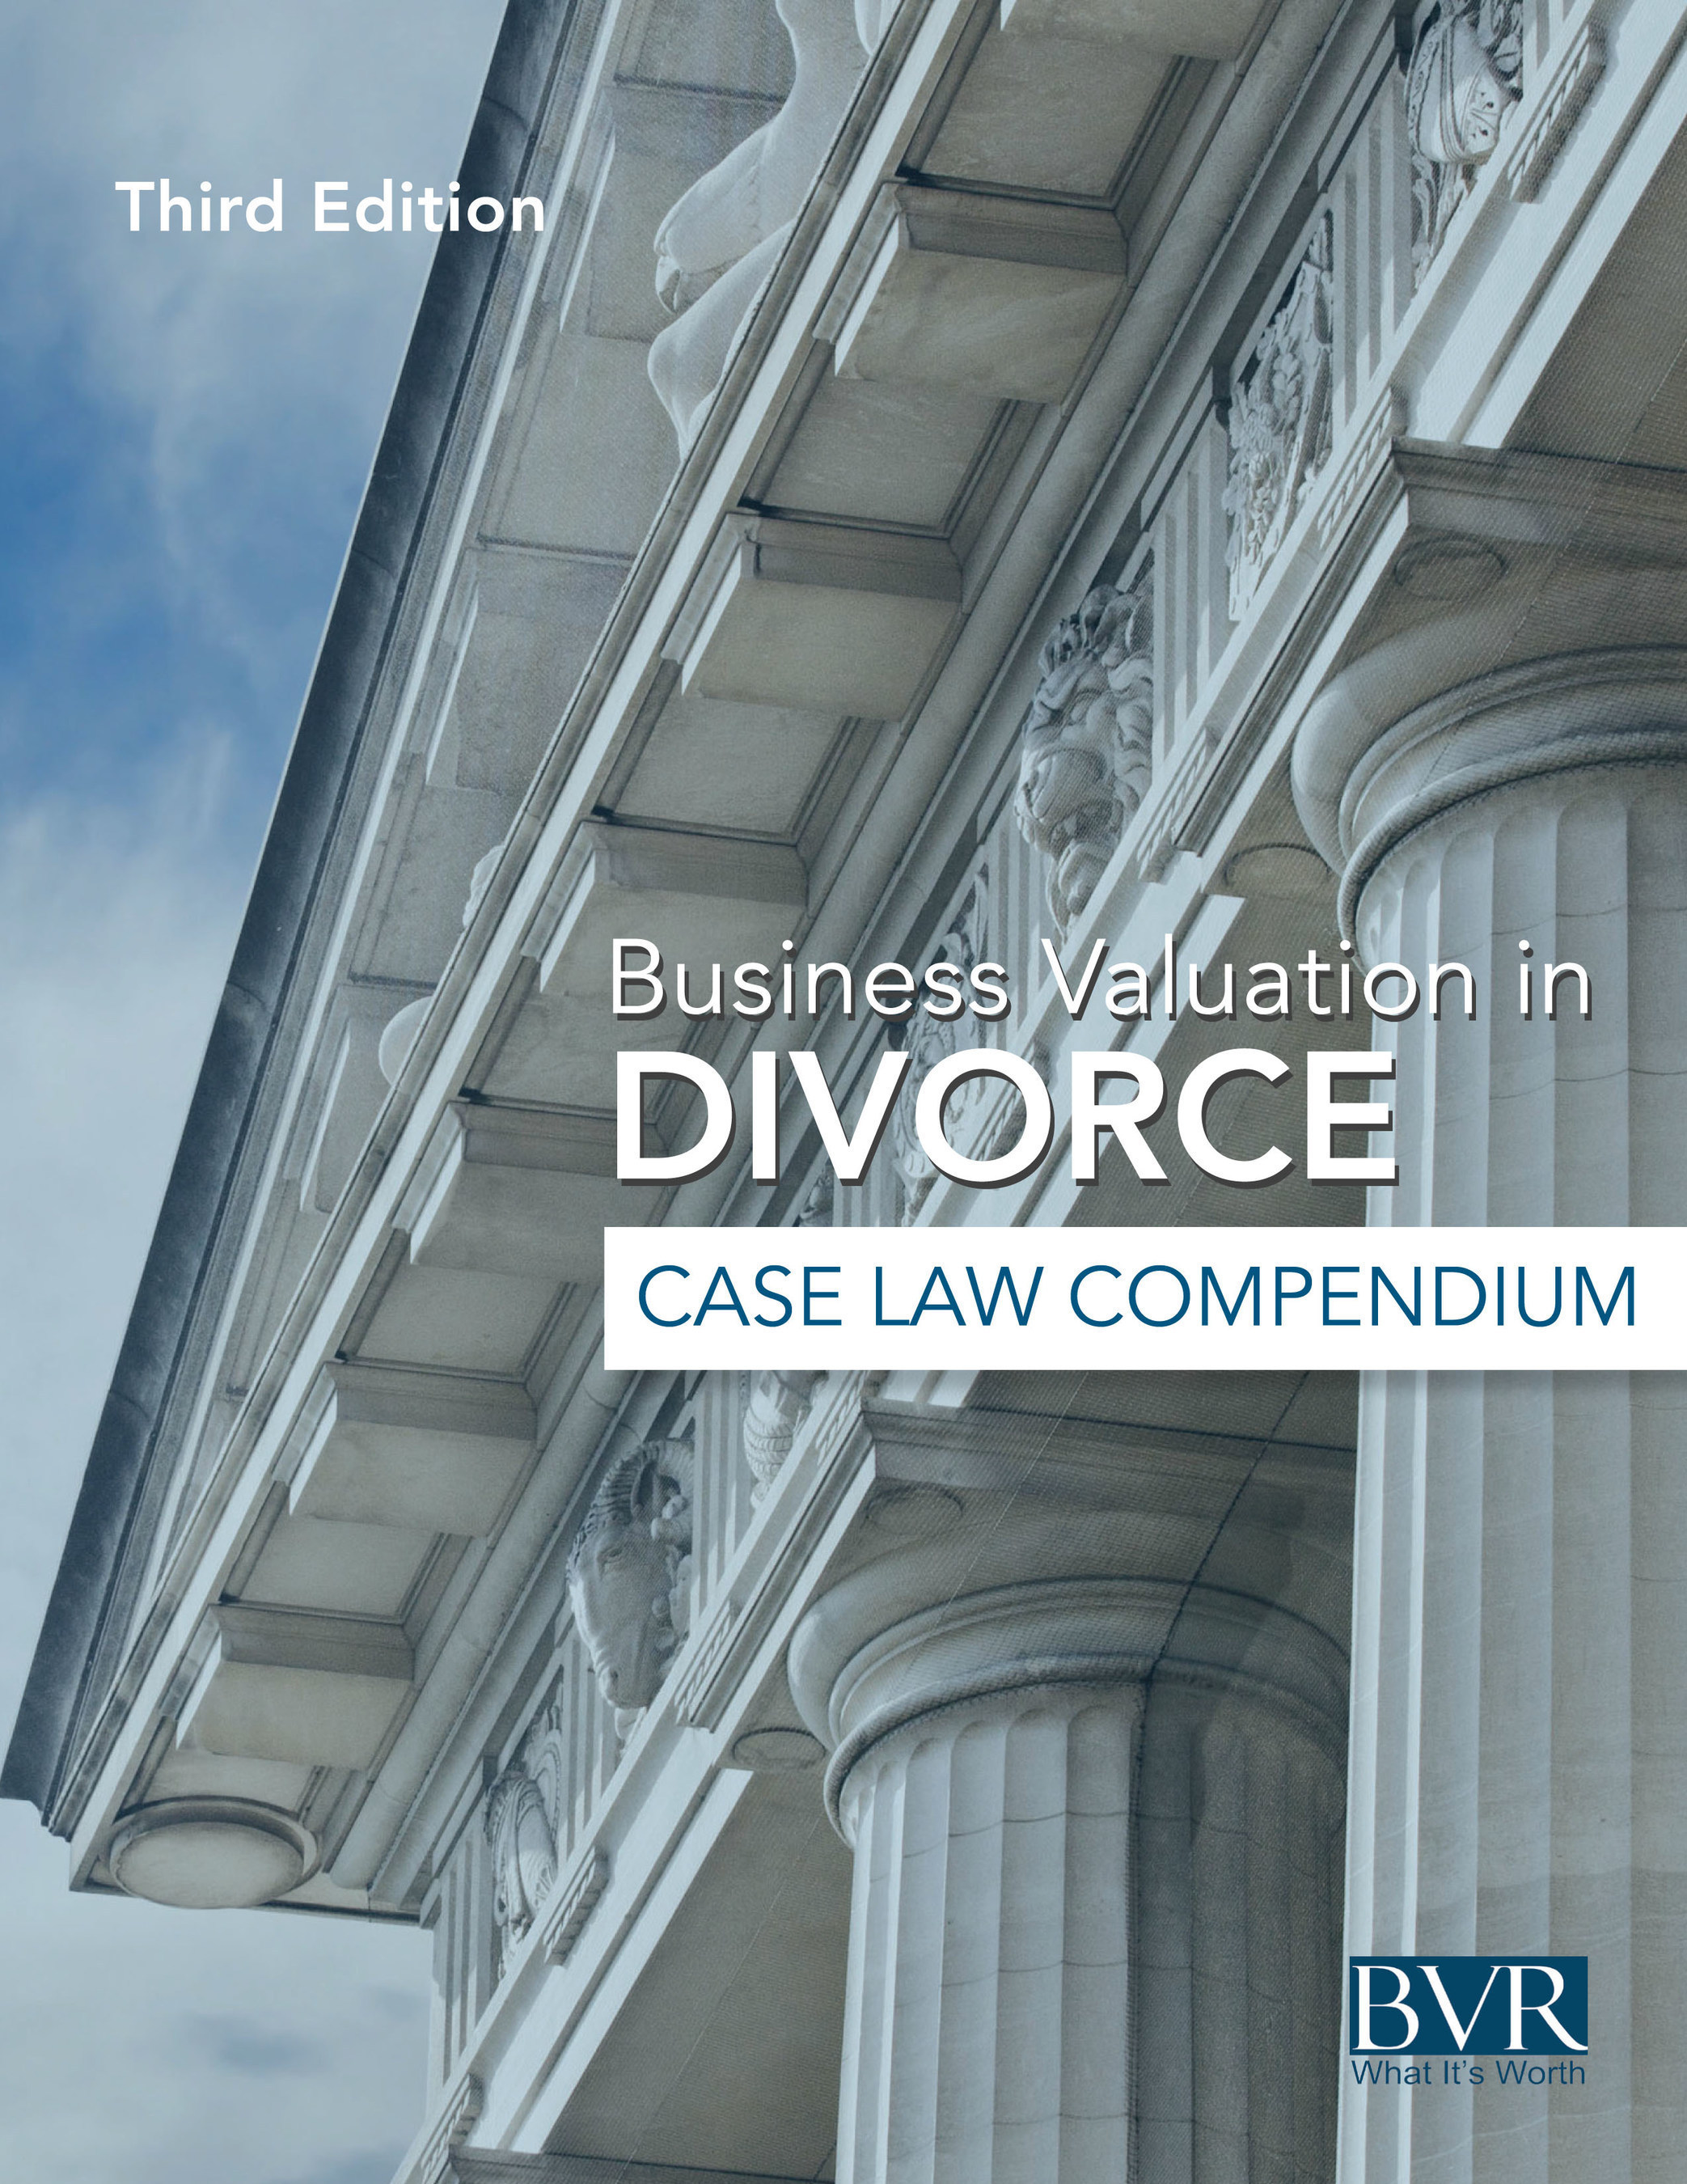 Business Valuation in Divorce Case Law Compendium (PRNewsFoto/Business Valuation Resources)